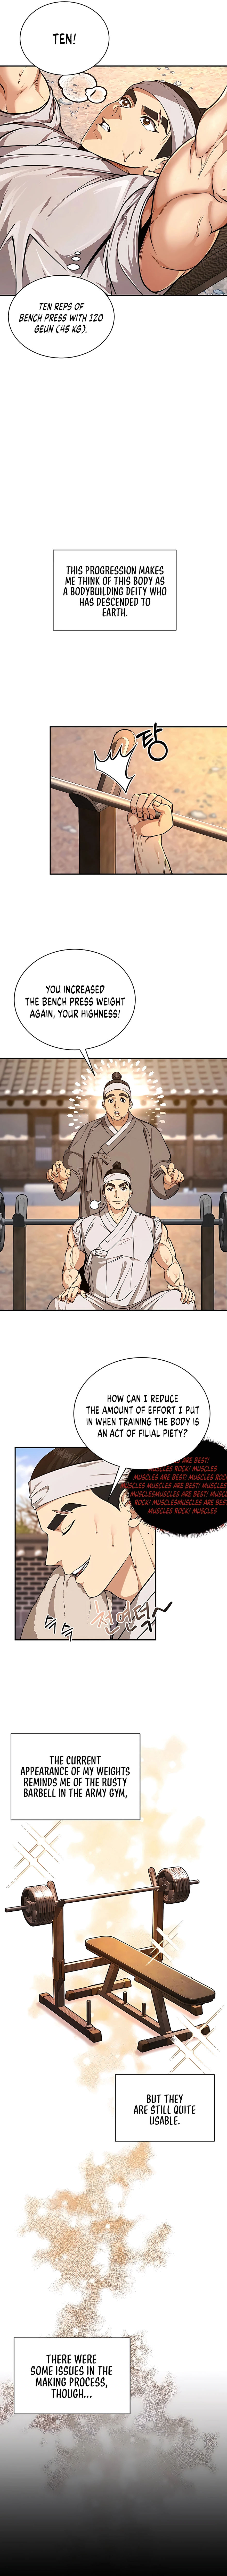 Muscle Joseon, Chapter 5 image 03